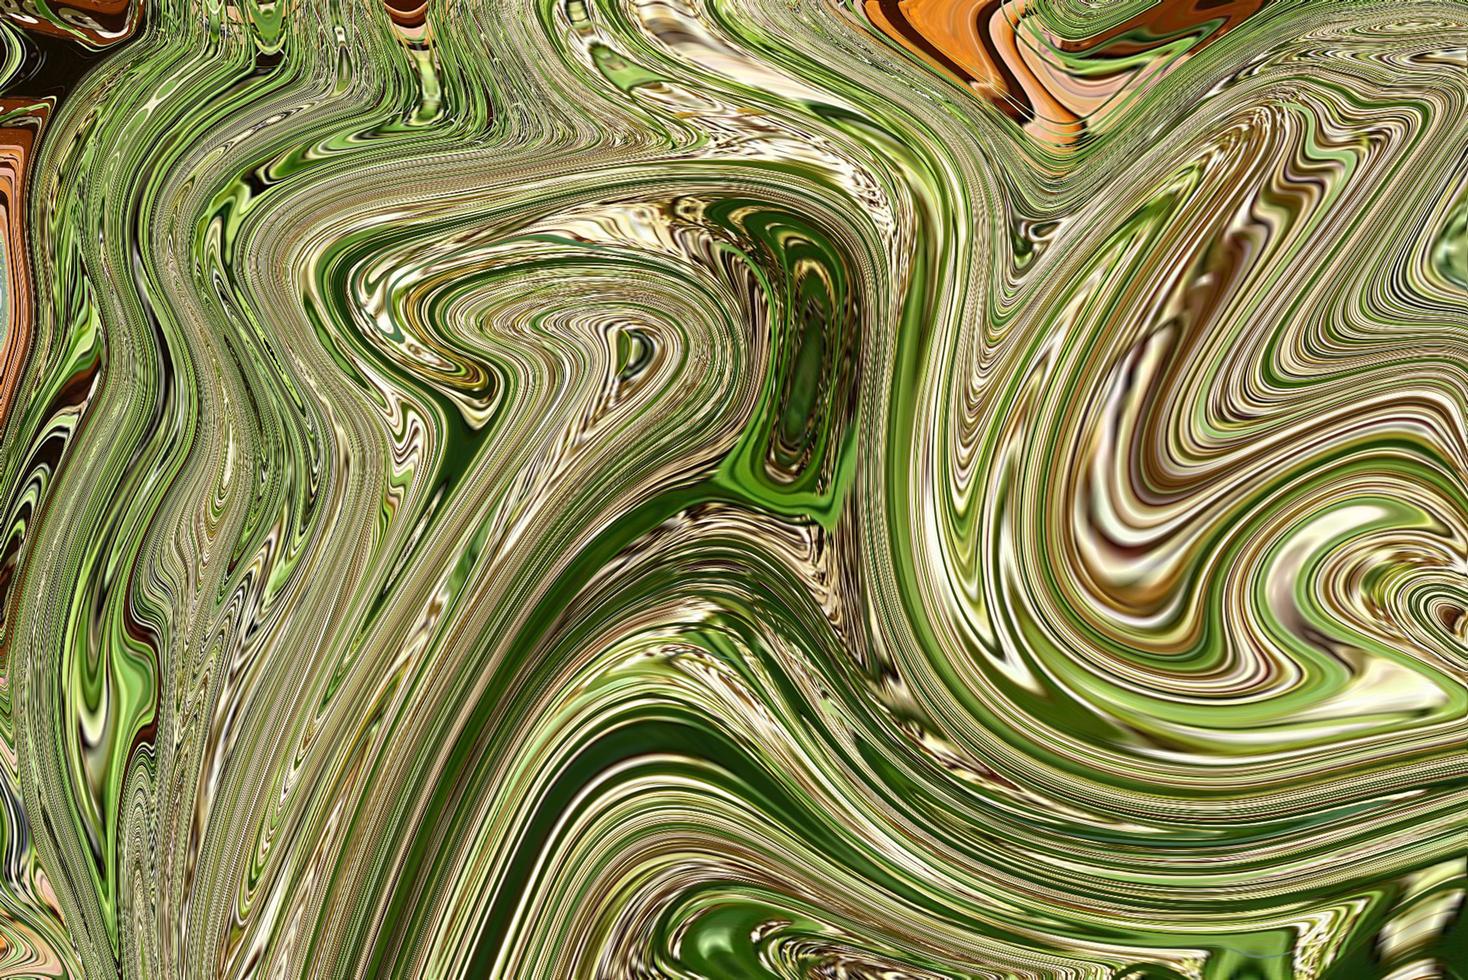 Liquid texture pattern background photo